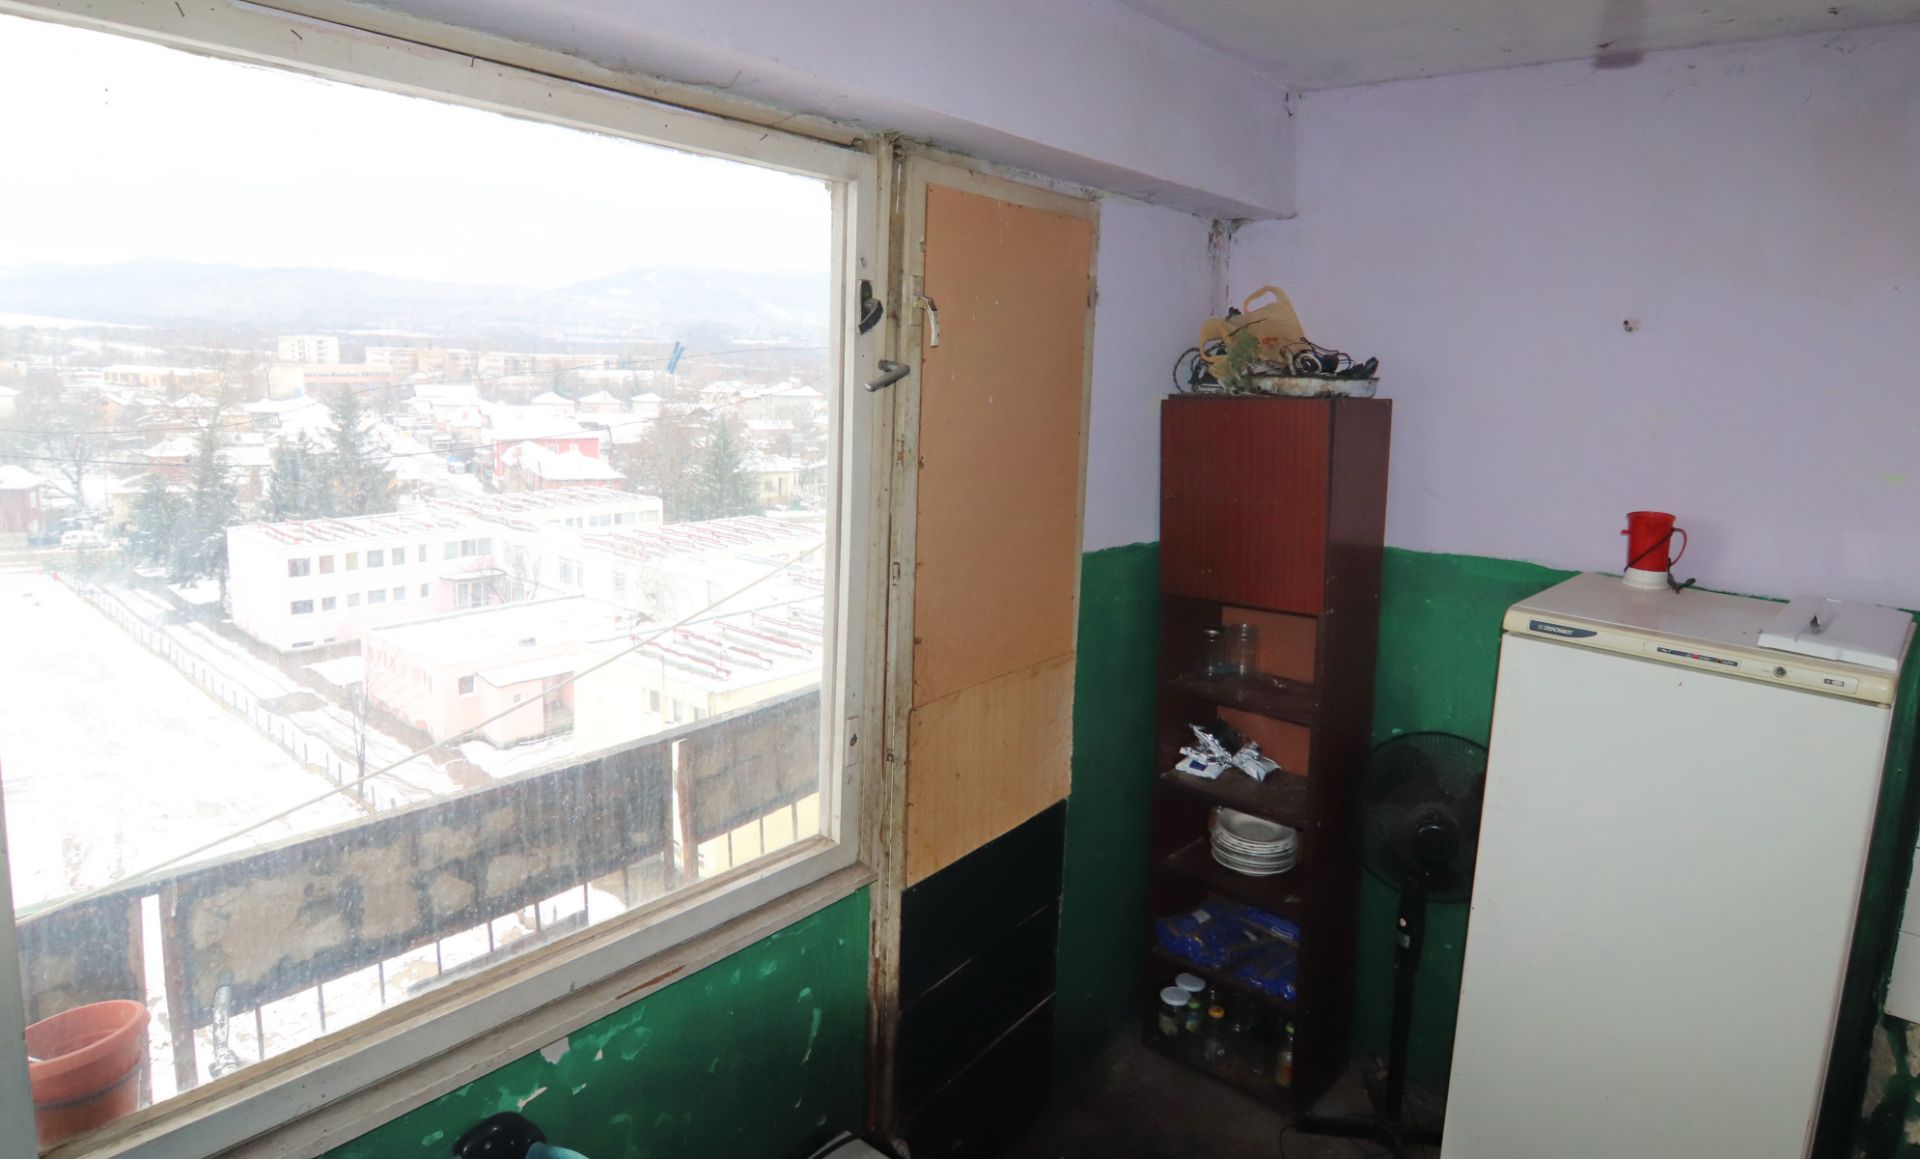 Freehold SKI REGION apartment with balcony - Near RIU Golf, Sofia, Berkovitsa - Image 11 of 11